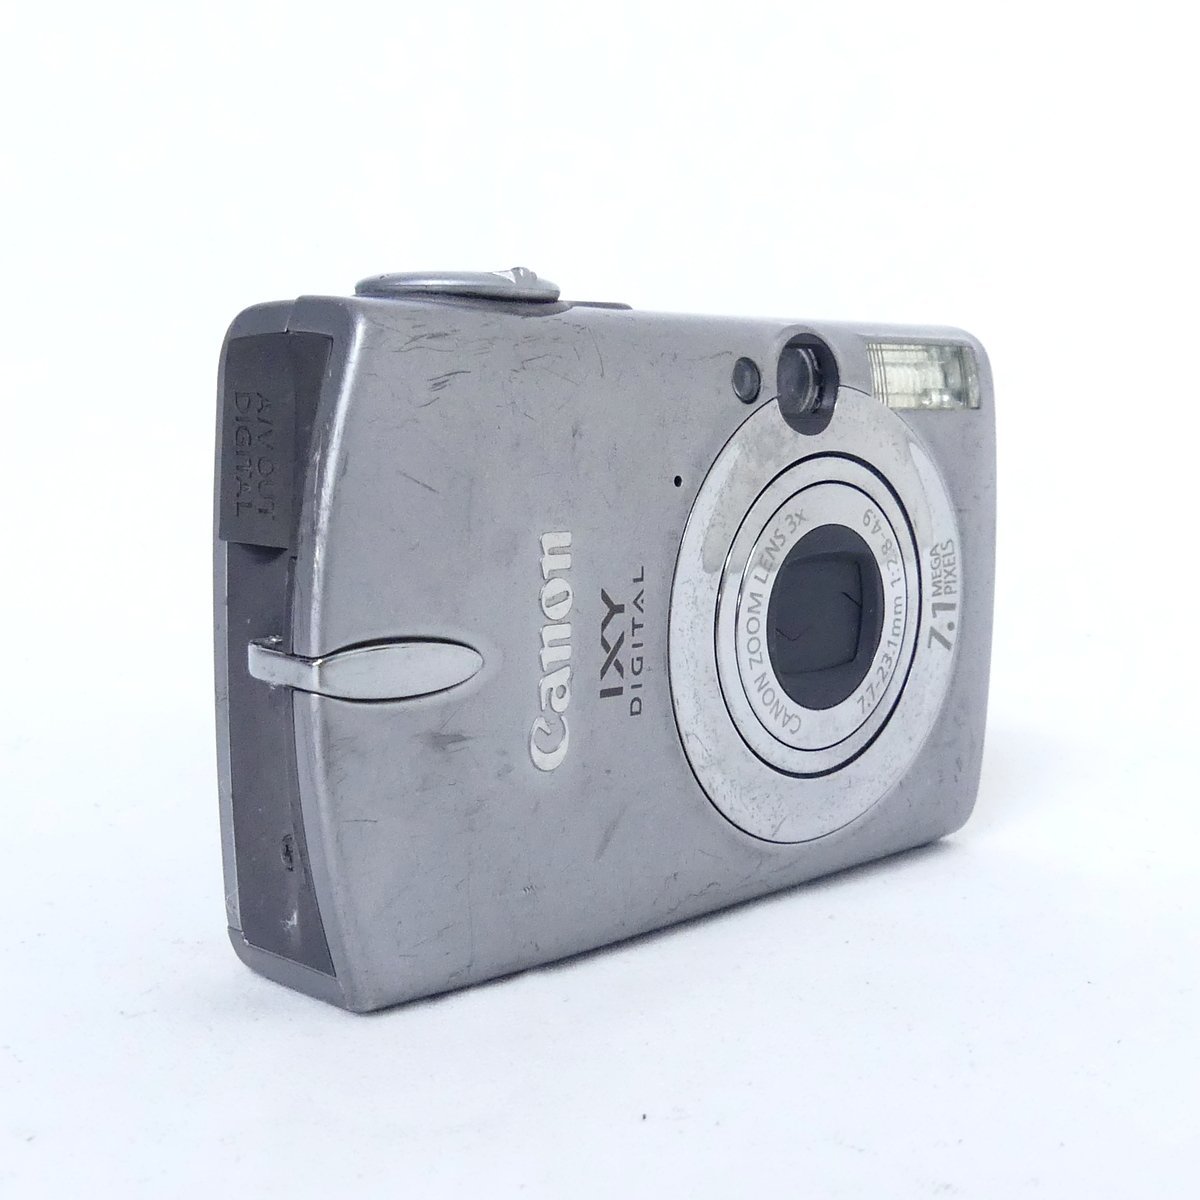 Canon キャノン IXY DIGITAL 600 イクシーデジタル600 PC1114 デジタルカメラ コンデジ 本体のみ USED /2401C_画像2